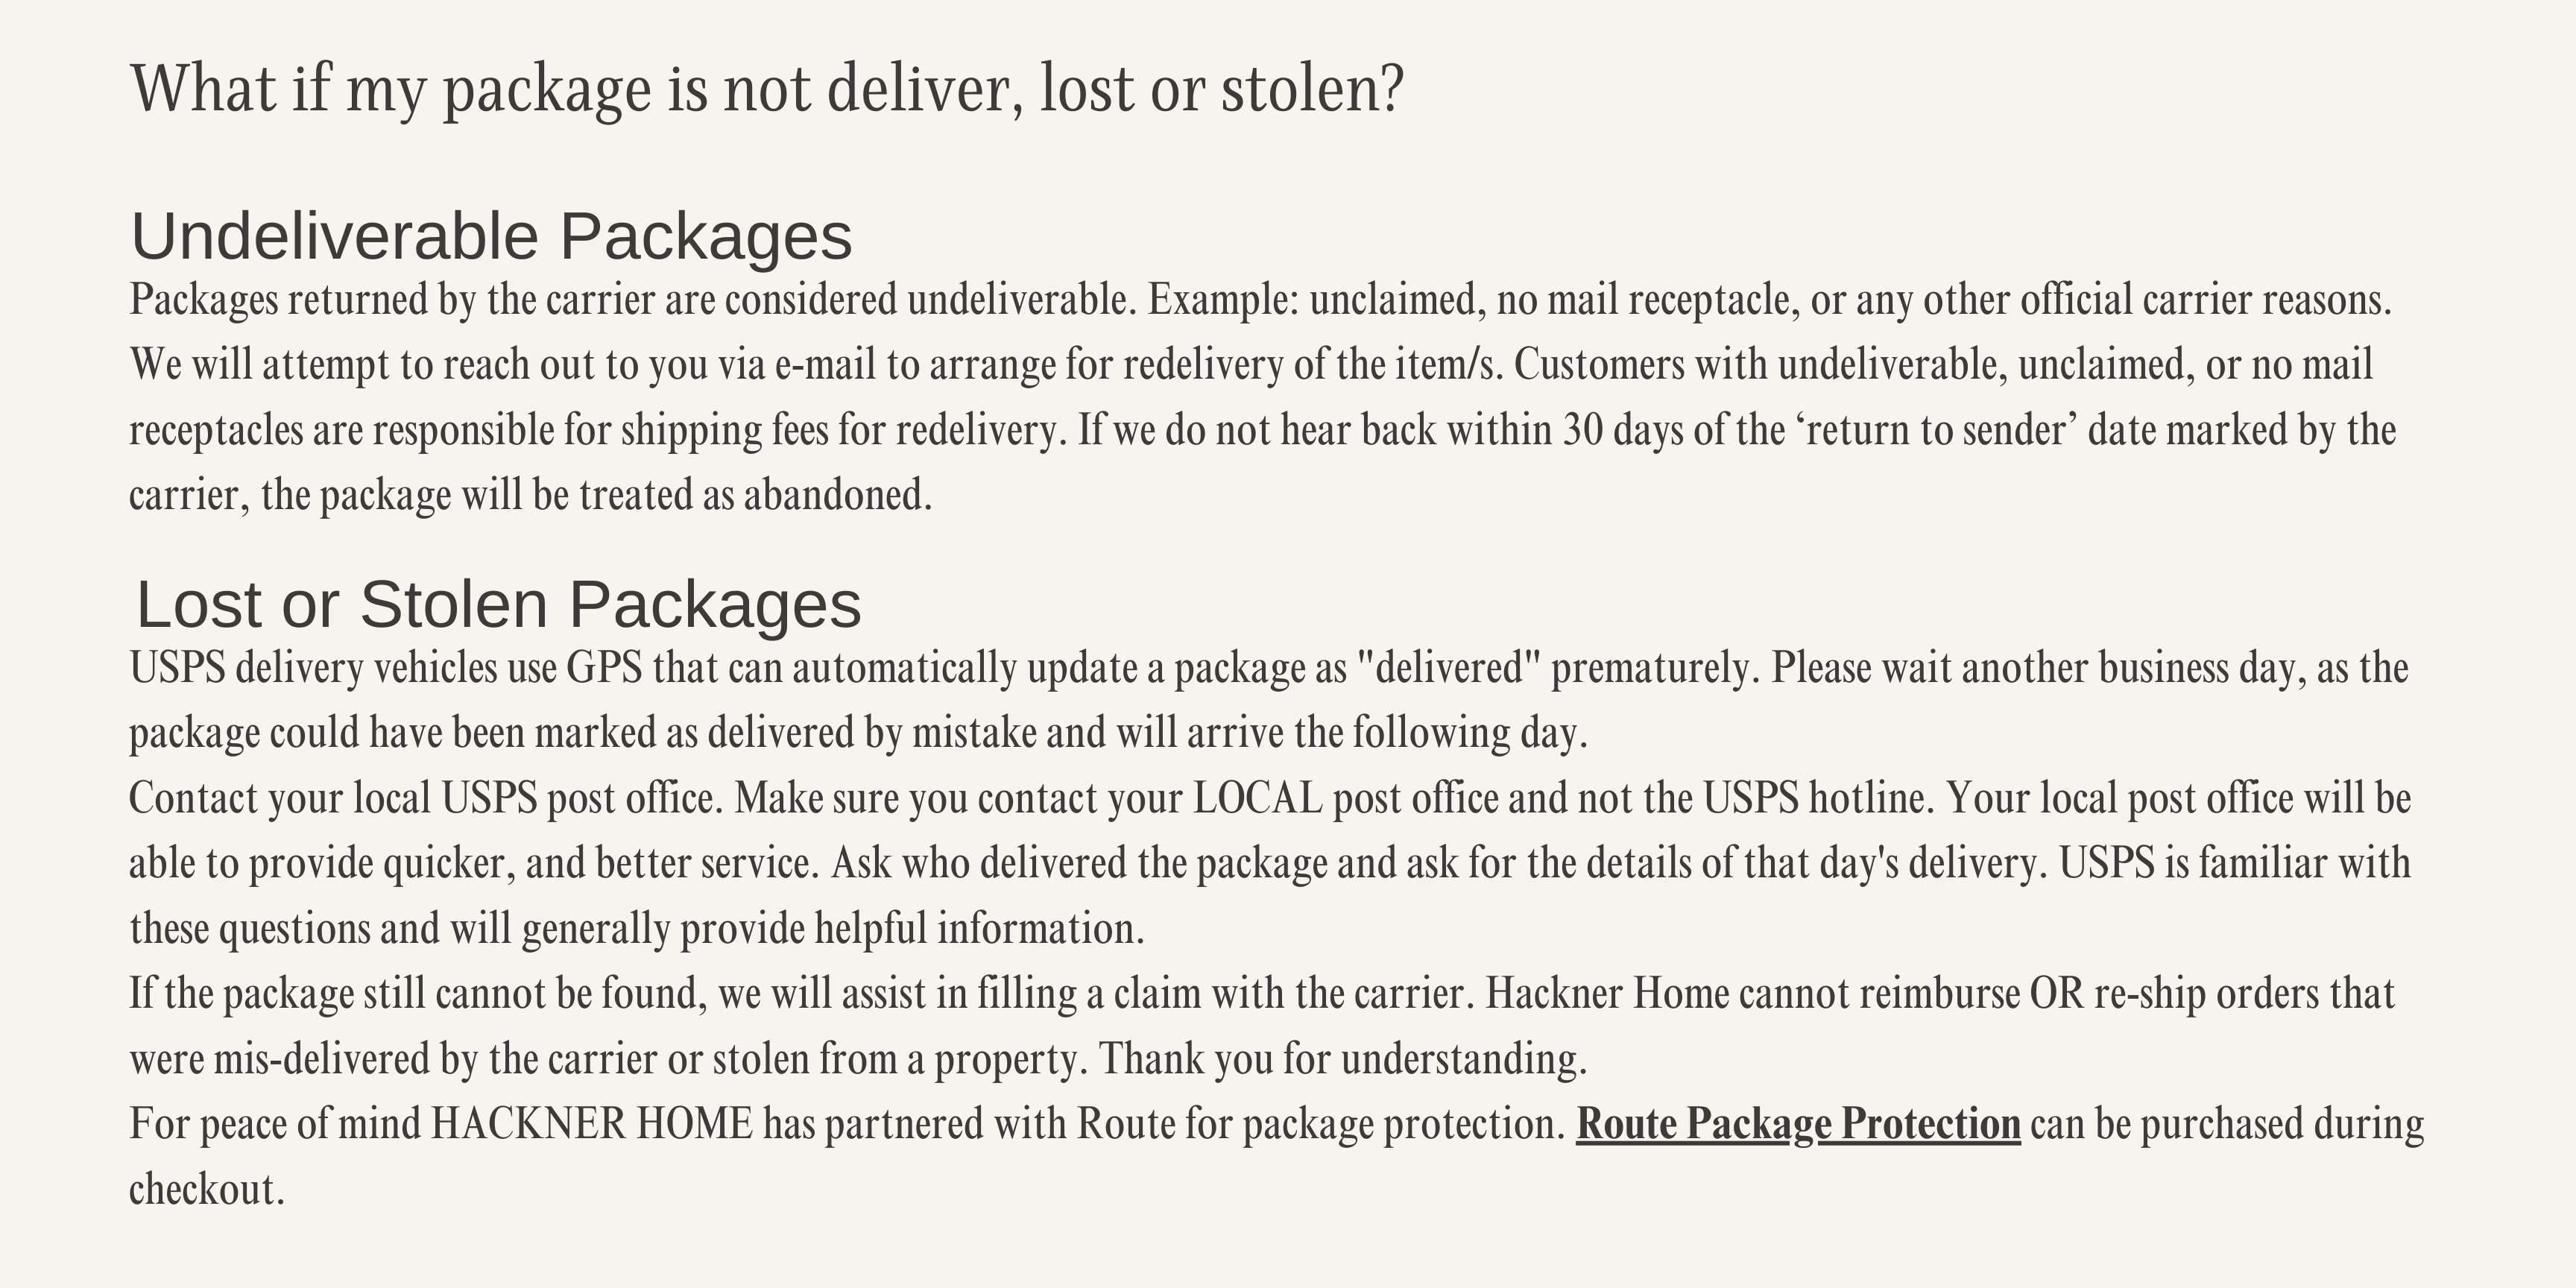 Hackner Home FAQ page